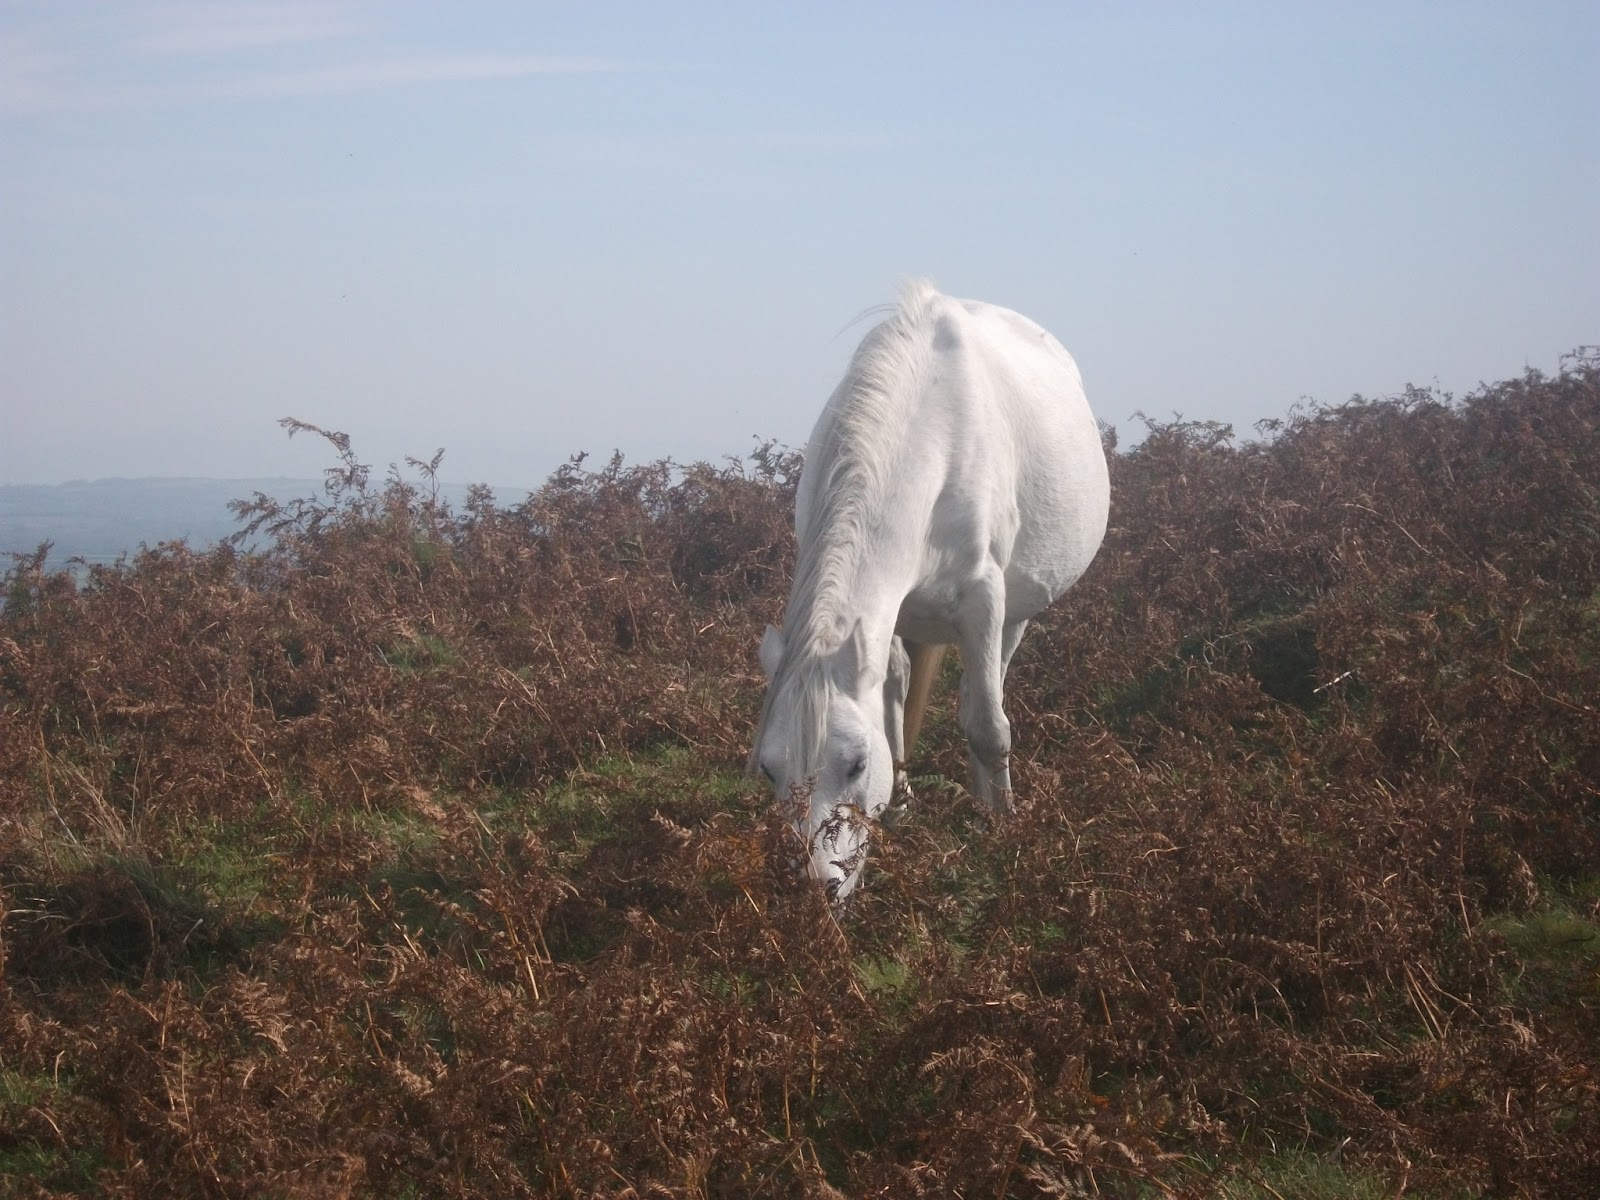 http://4.bp.blogspot.com/-hlVr_l9BCIM/T4nB5EzLITI/AAAAAAAABjE/8nC2RBFXoS0/s1600/A+wild+white+horse+grazing+on+a+hill+in+the+autumn.jpg